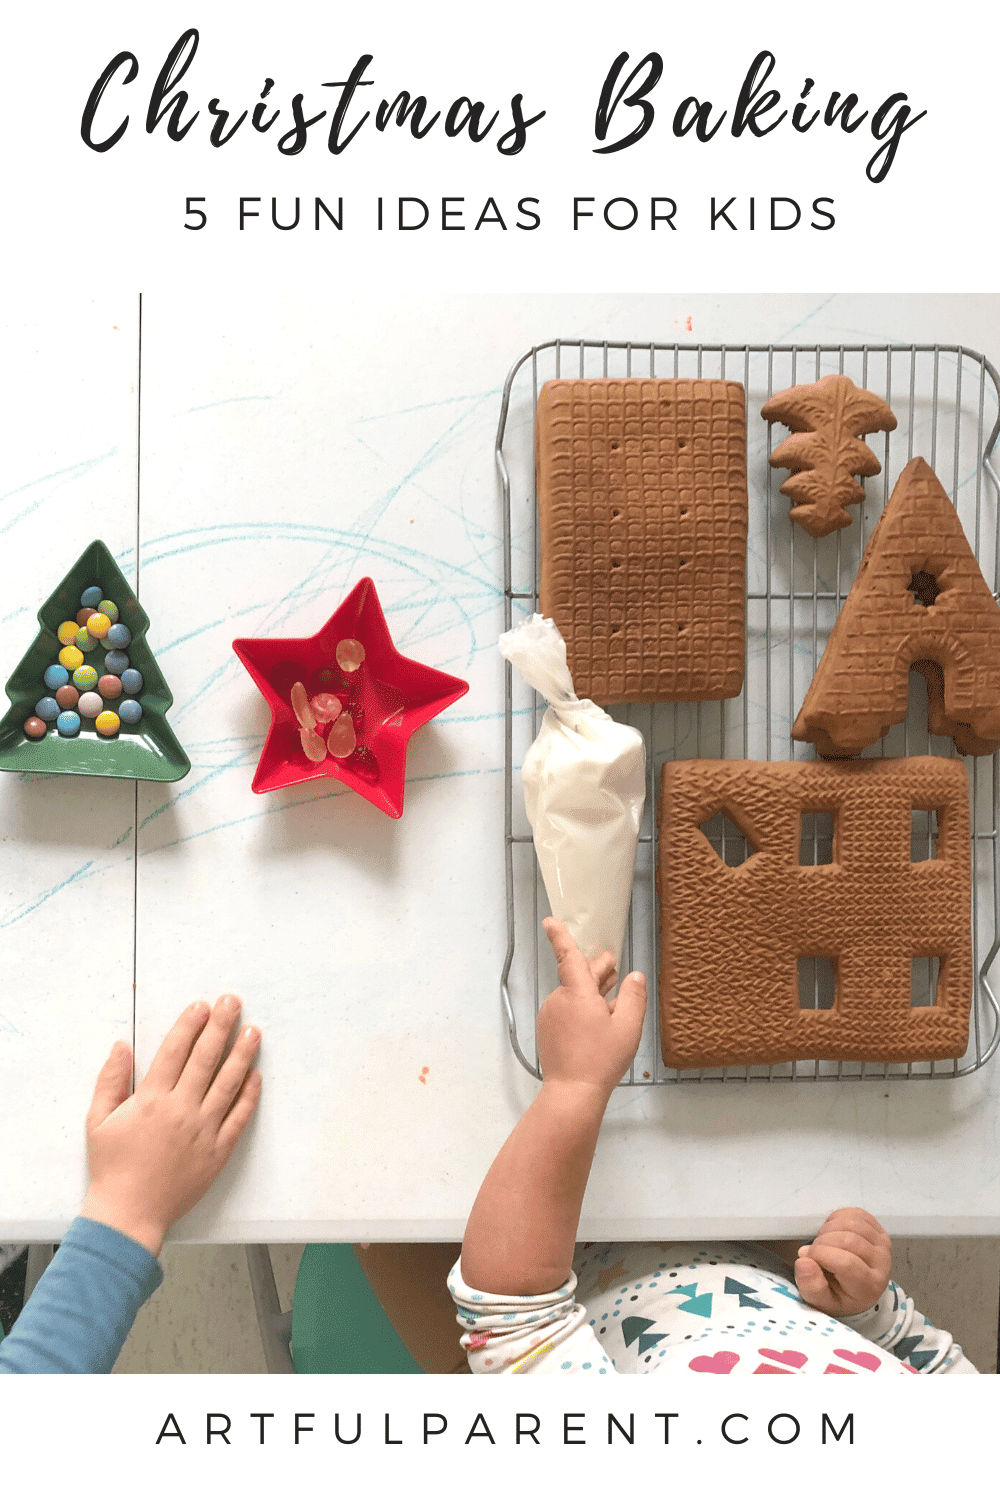 5 Christmas Baking Ideas for Kids